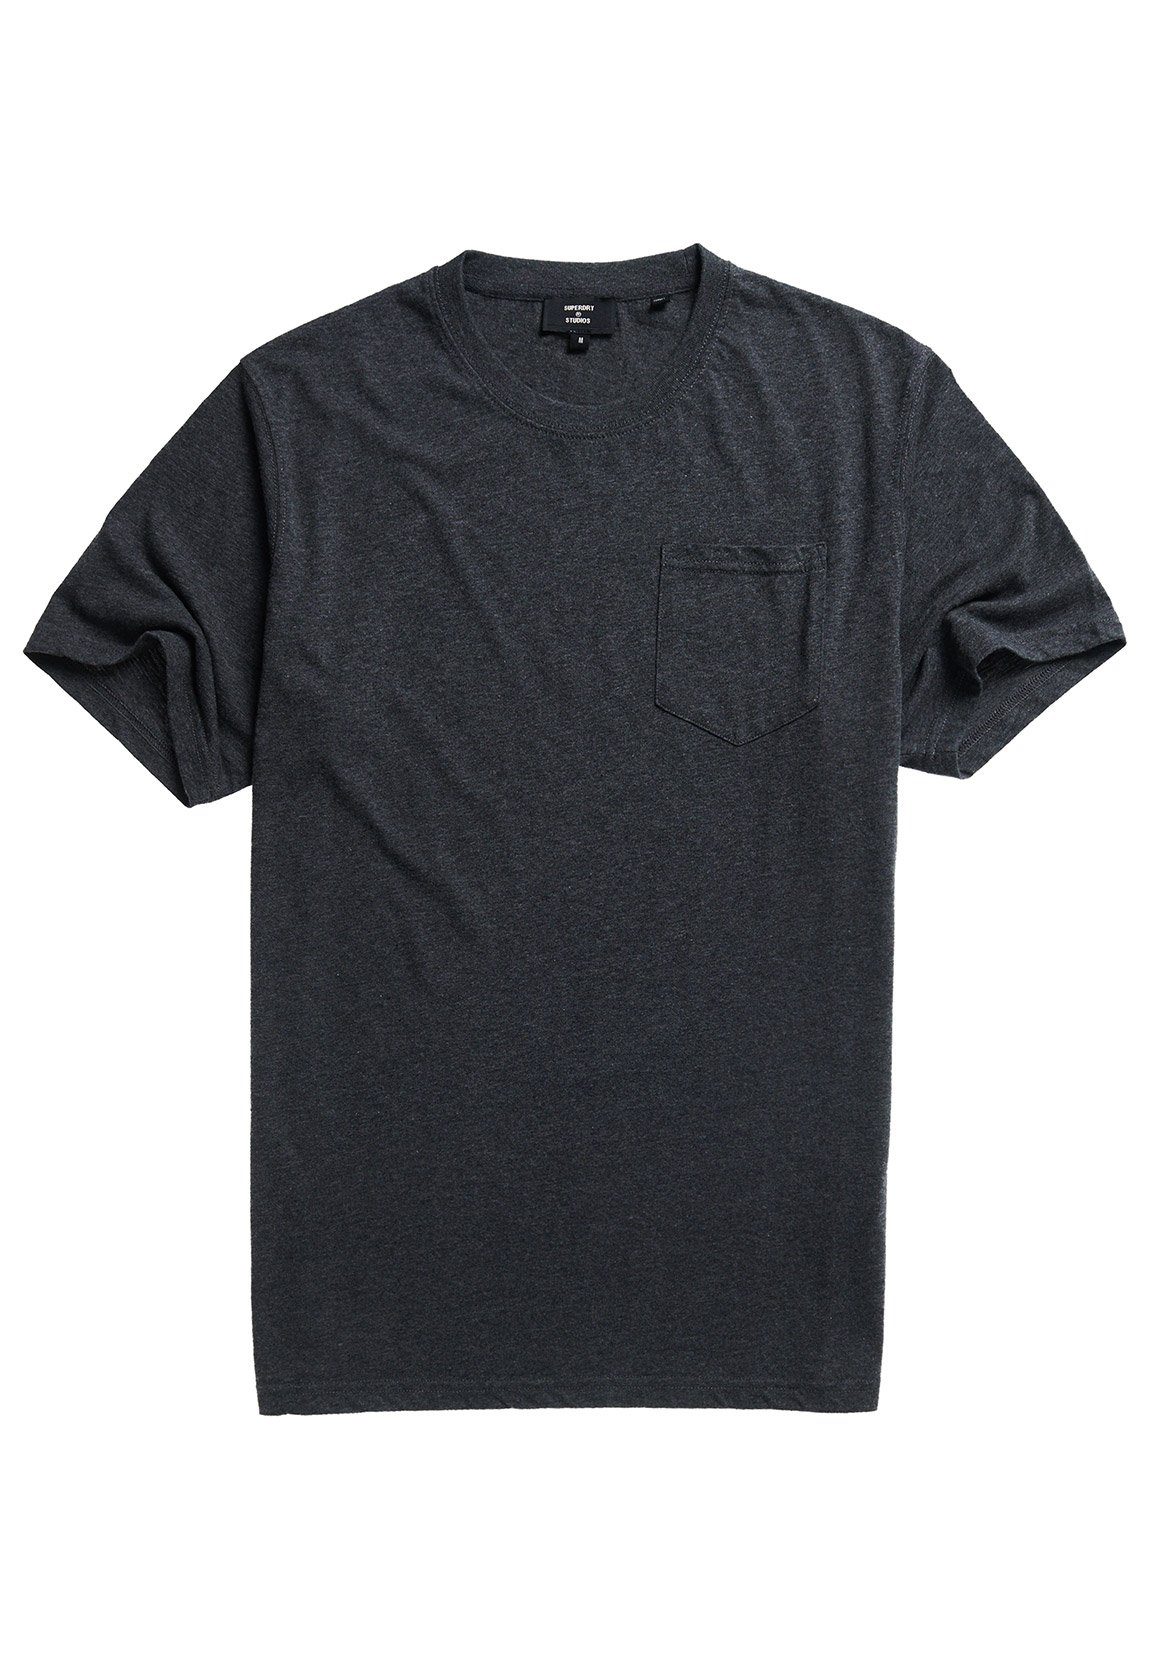 Superdry T-Shirt Superdry Herren T-Shirt AUTHENTIC COTTON TEE Charcoal Marl Dunkelgrau